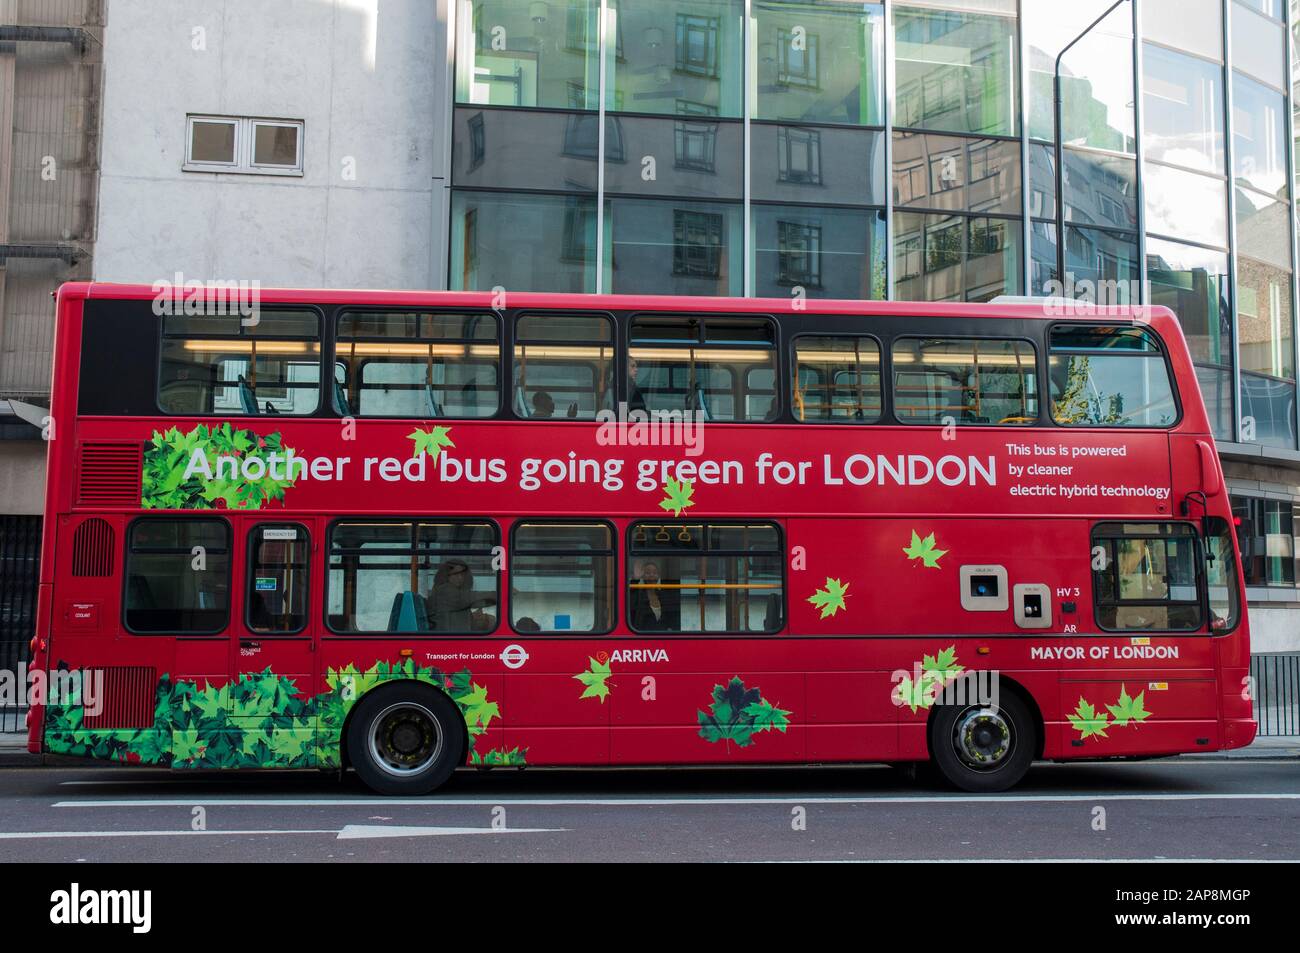 London bus bears a 'going green' advertising slogan Stock Photo